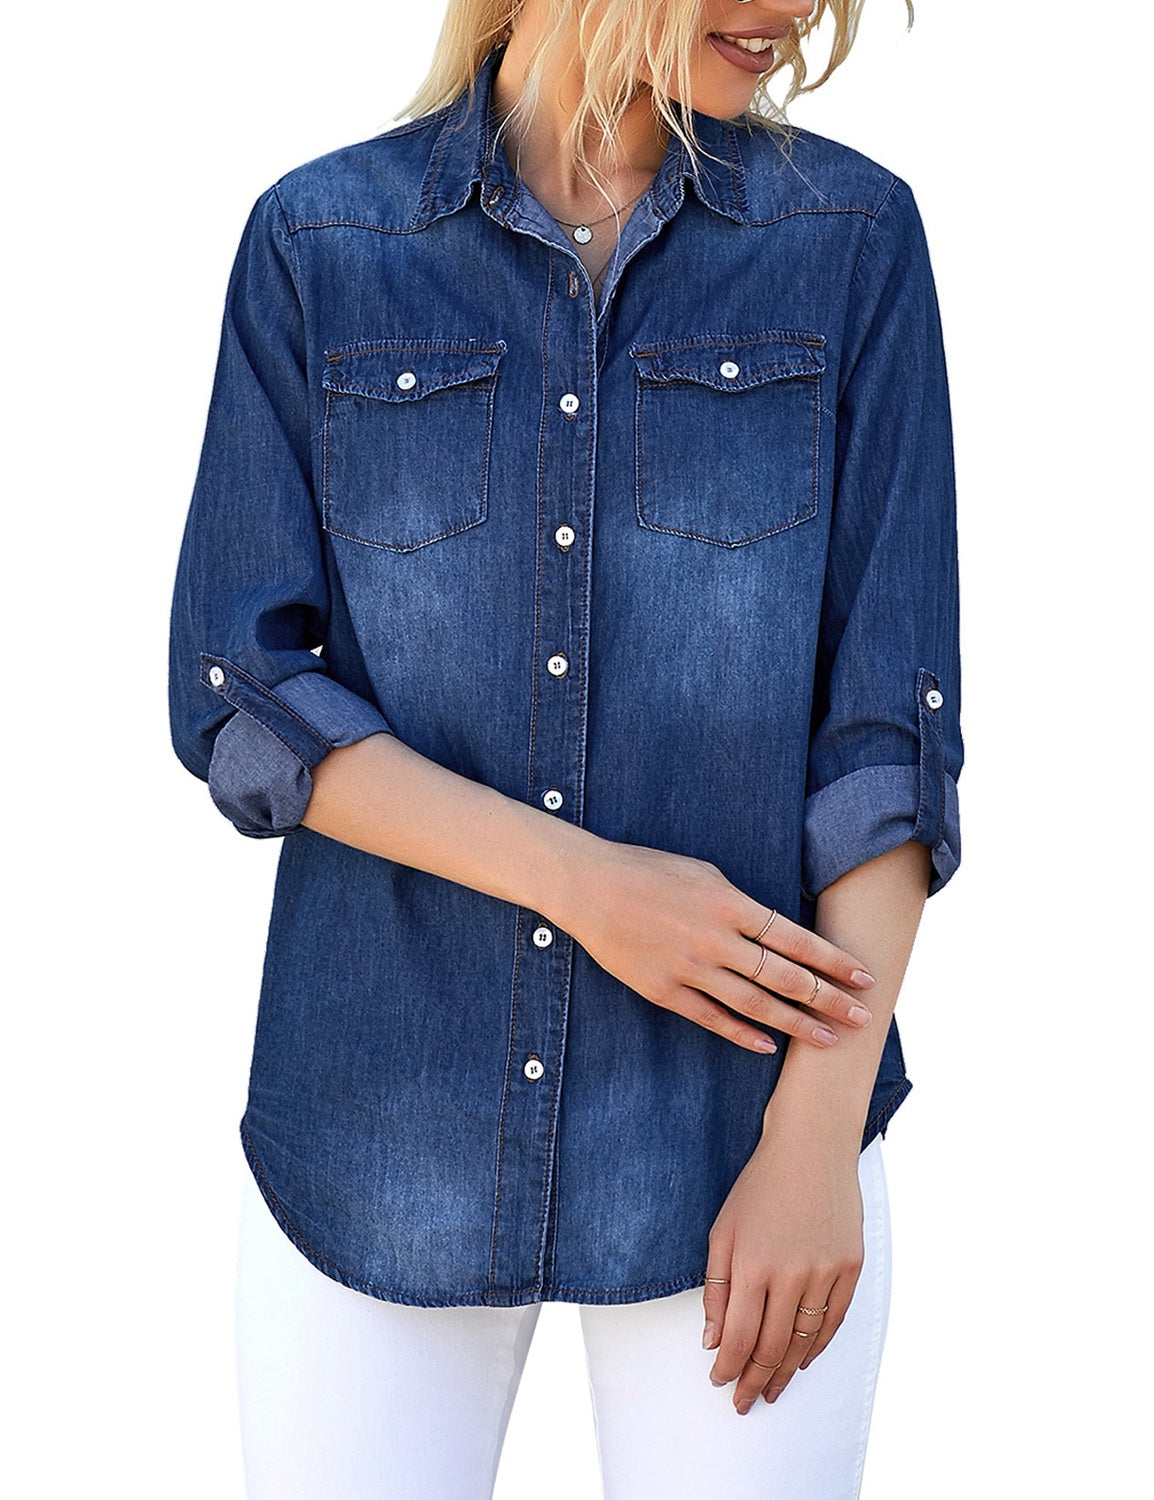 LookbookStore Women's Long Sleeve Collared Shirt Button Down Denim Blo ...